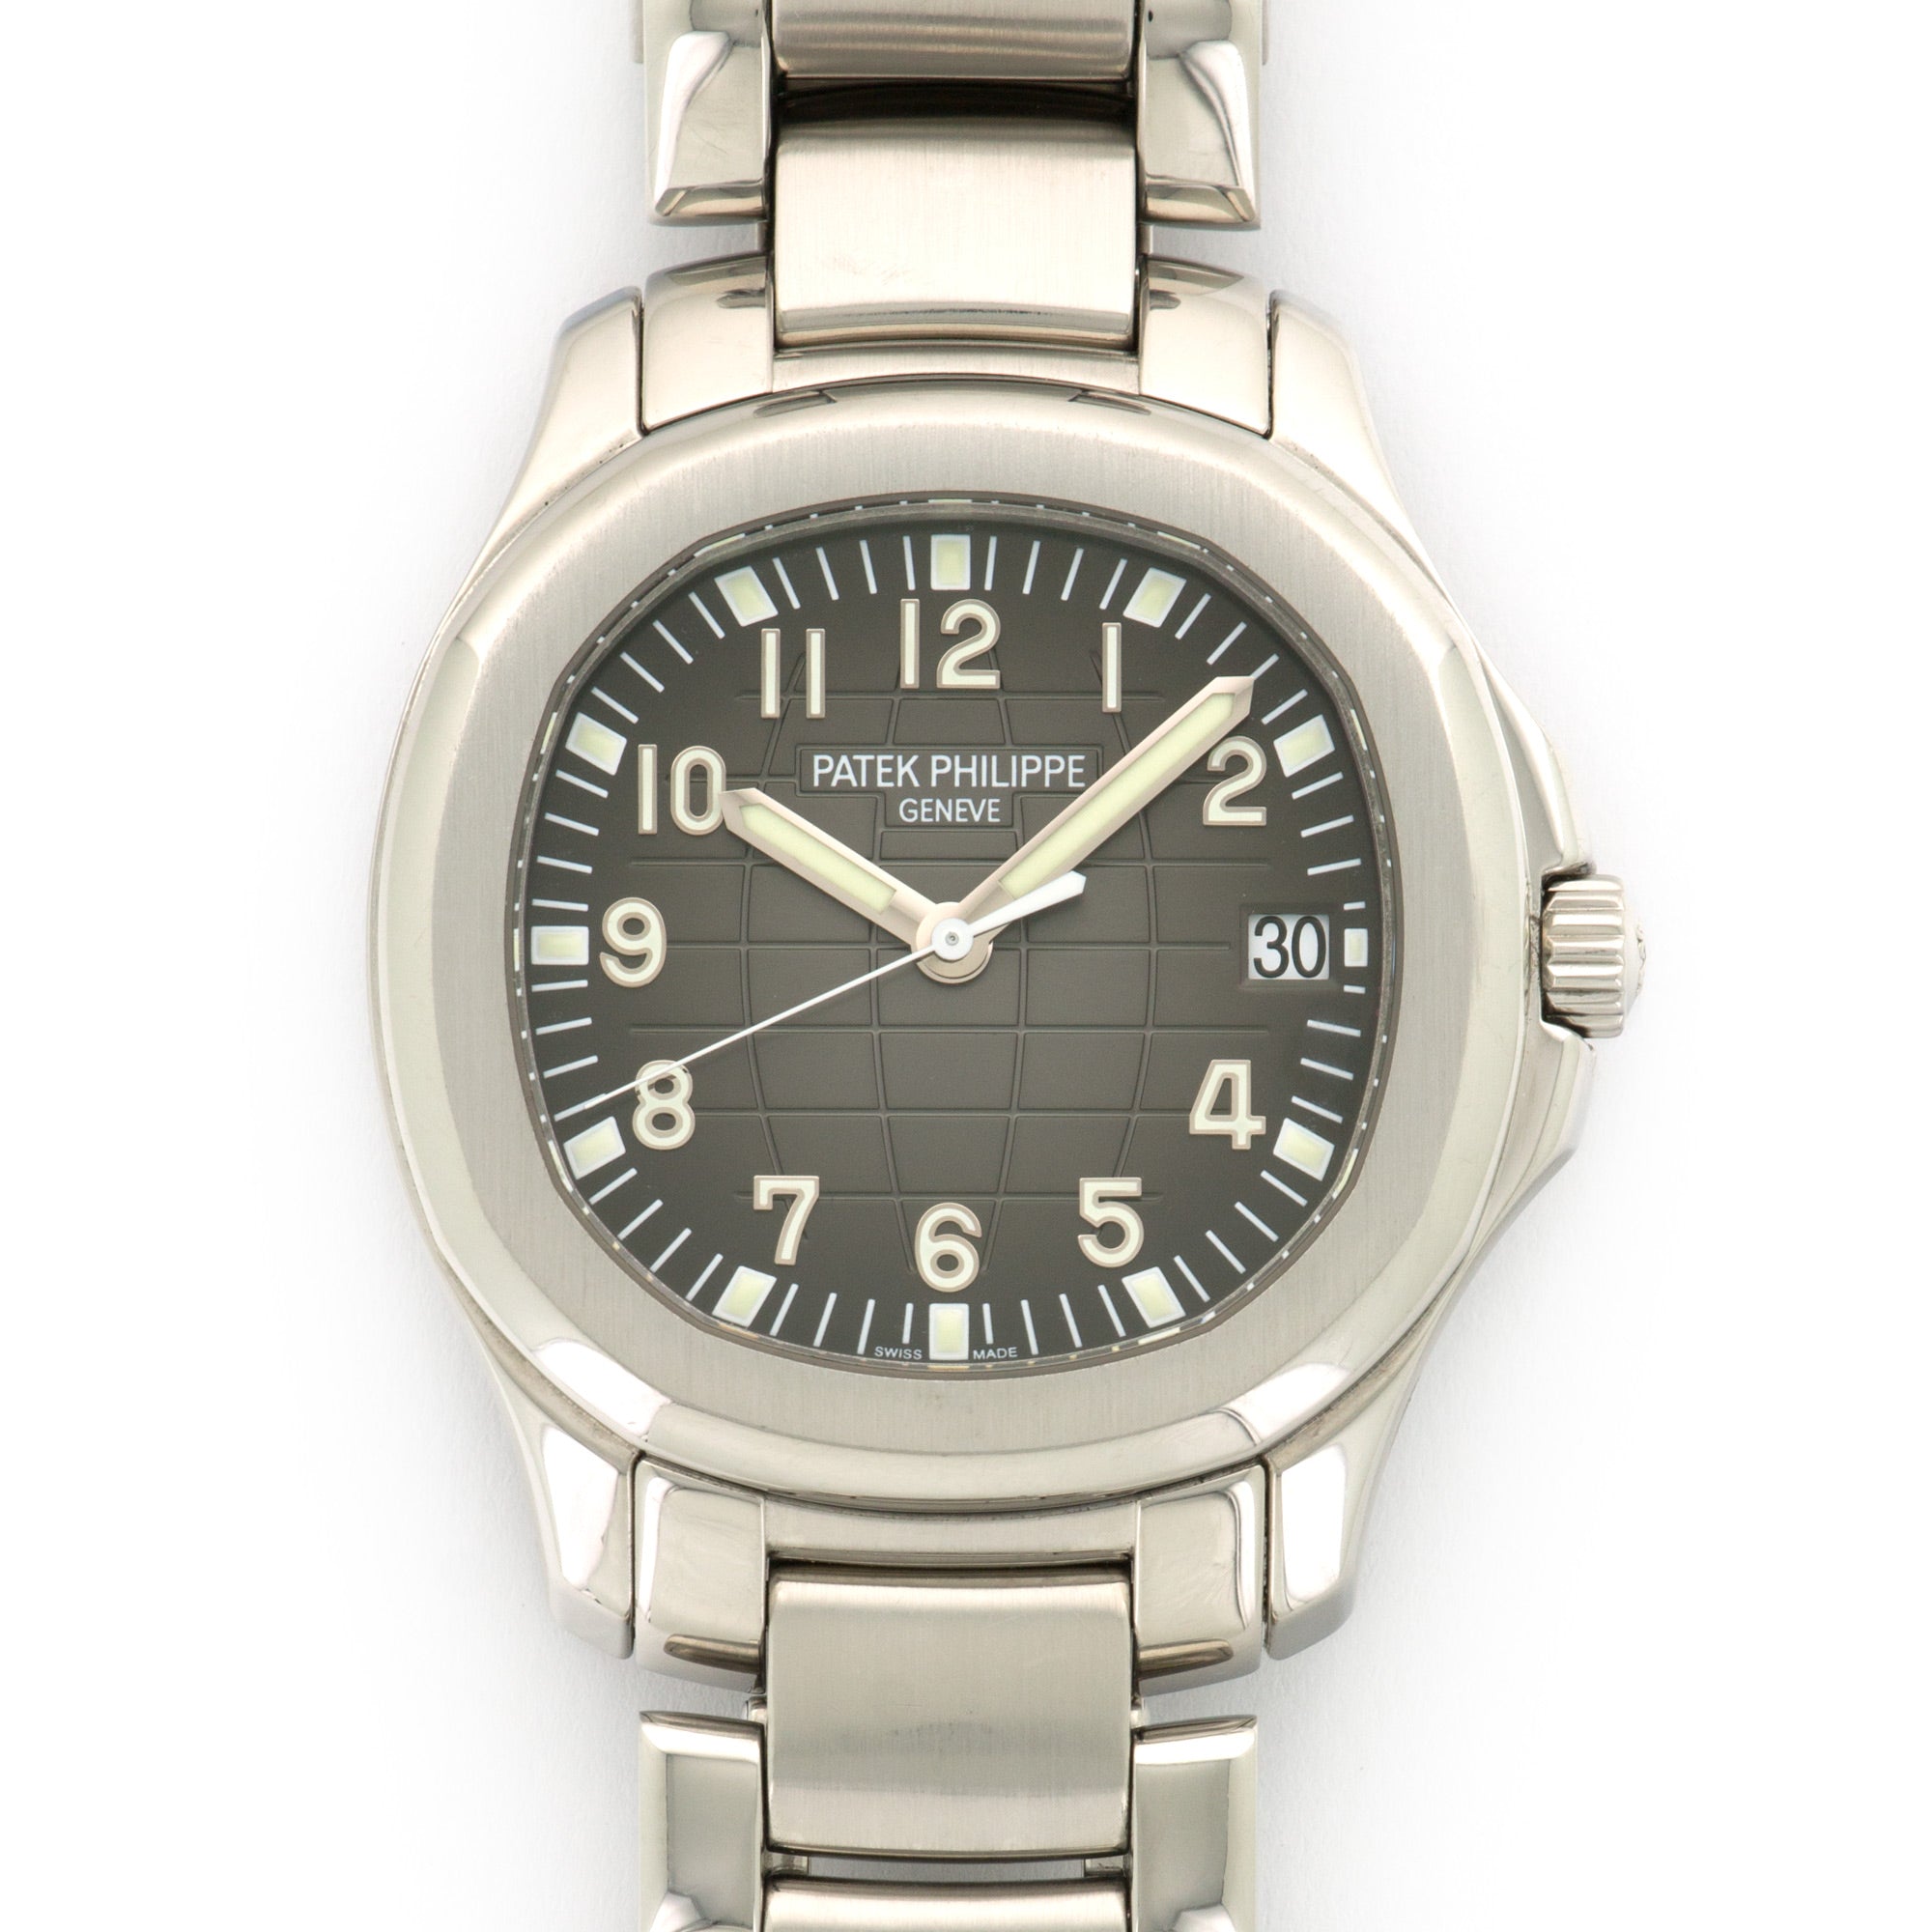 Patek Philippe - Patek Philippe Steel Aquanaut Jumbo Watch Ref. 5167/1a - The Keystone Watches